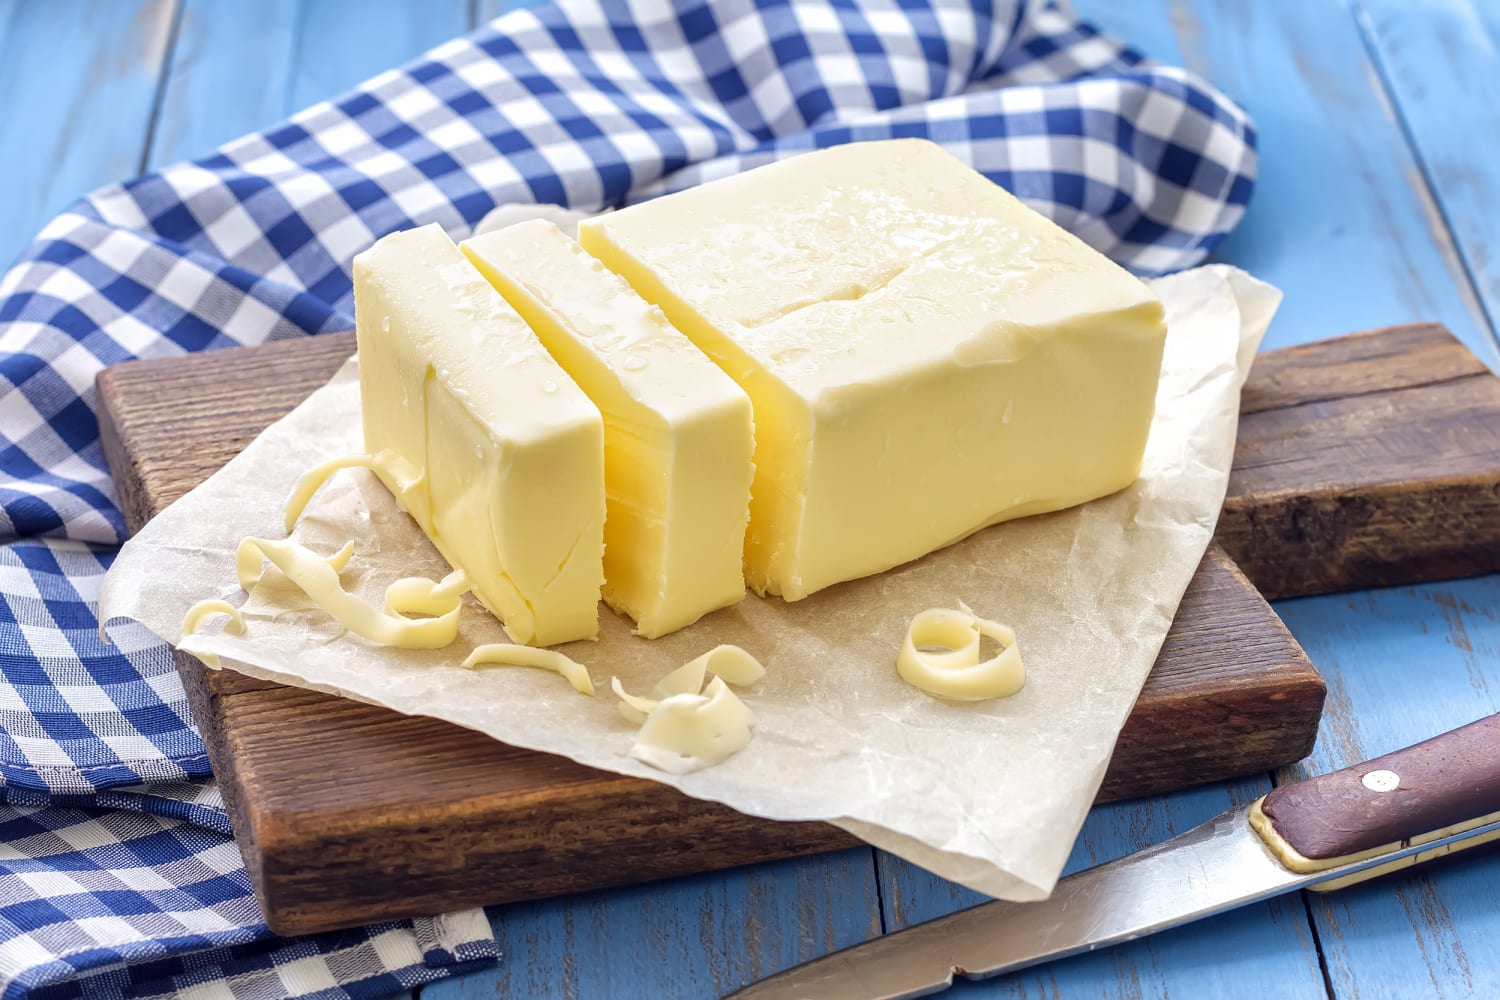 Butter Molds - Vital Farms